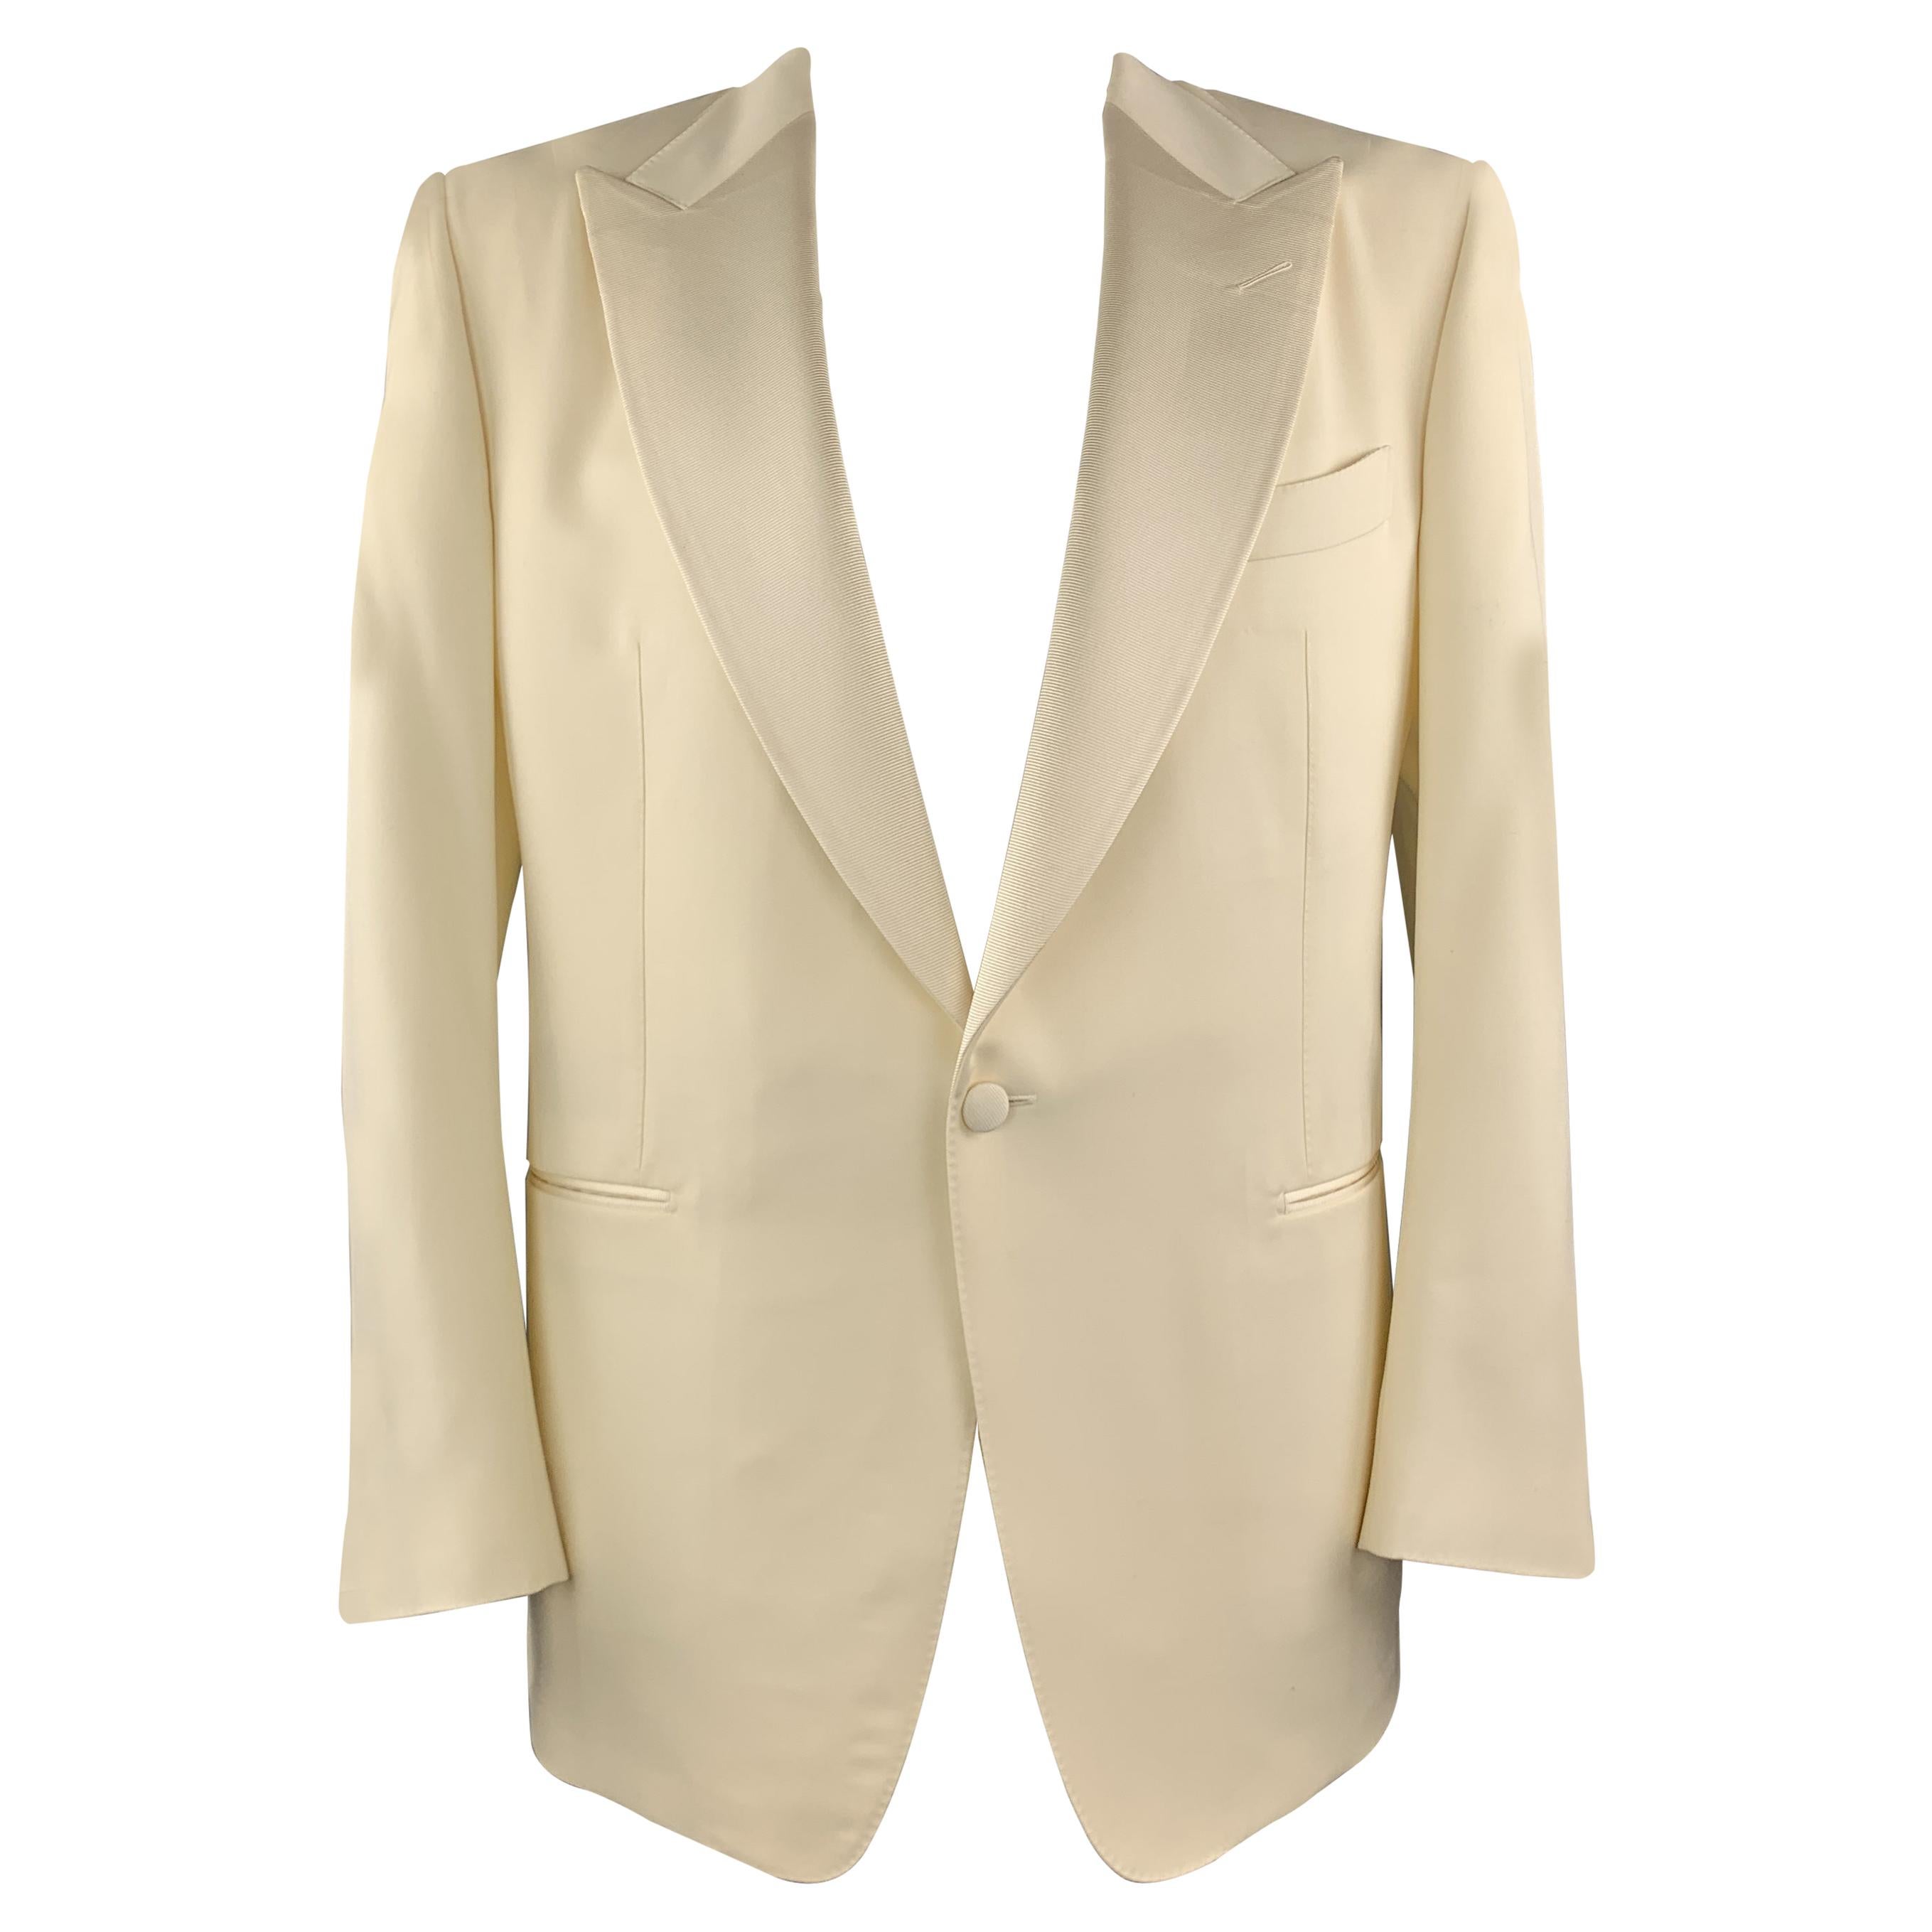 TOM FORD Size US 48 IT 58 R Cream Wool / Mohair Peak Lapel Tuxedo Sport Coat